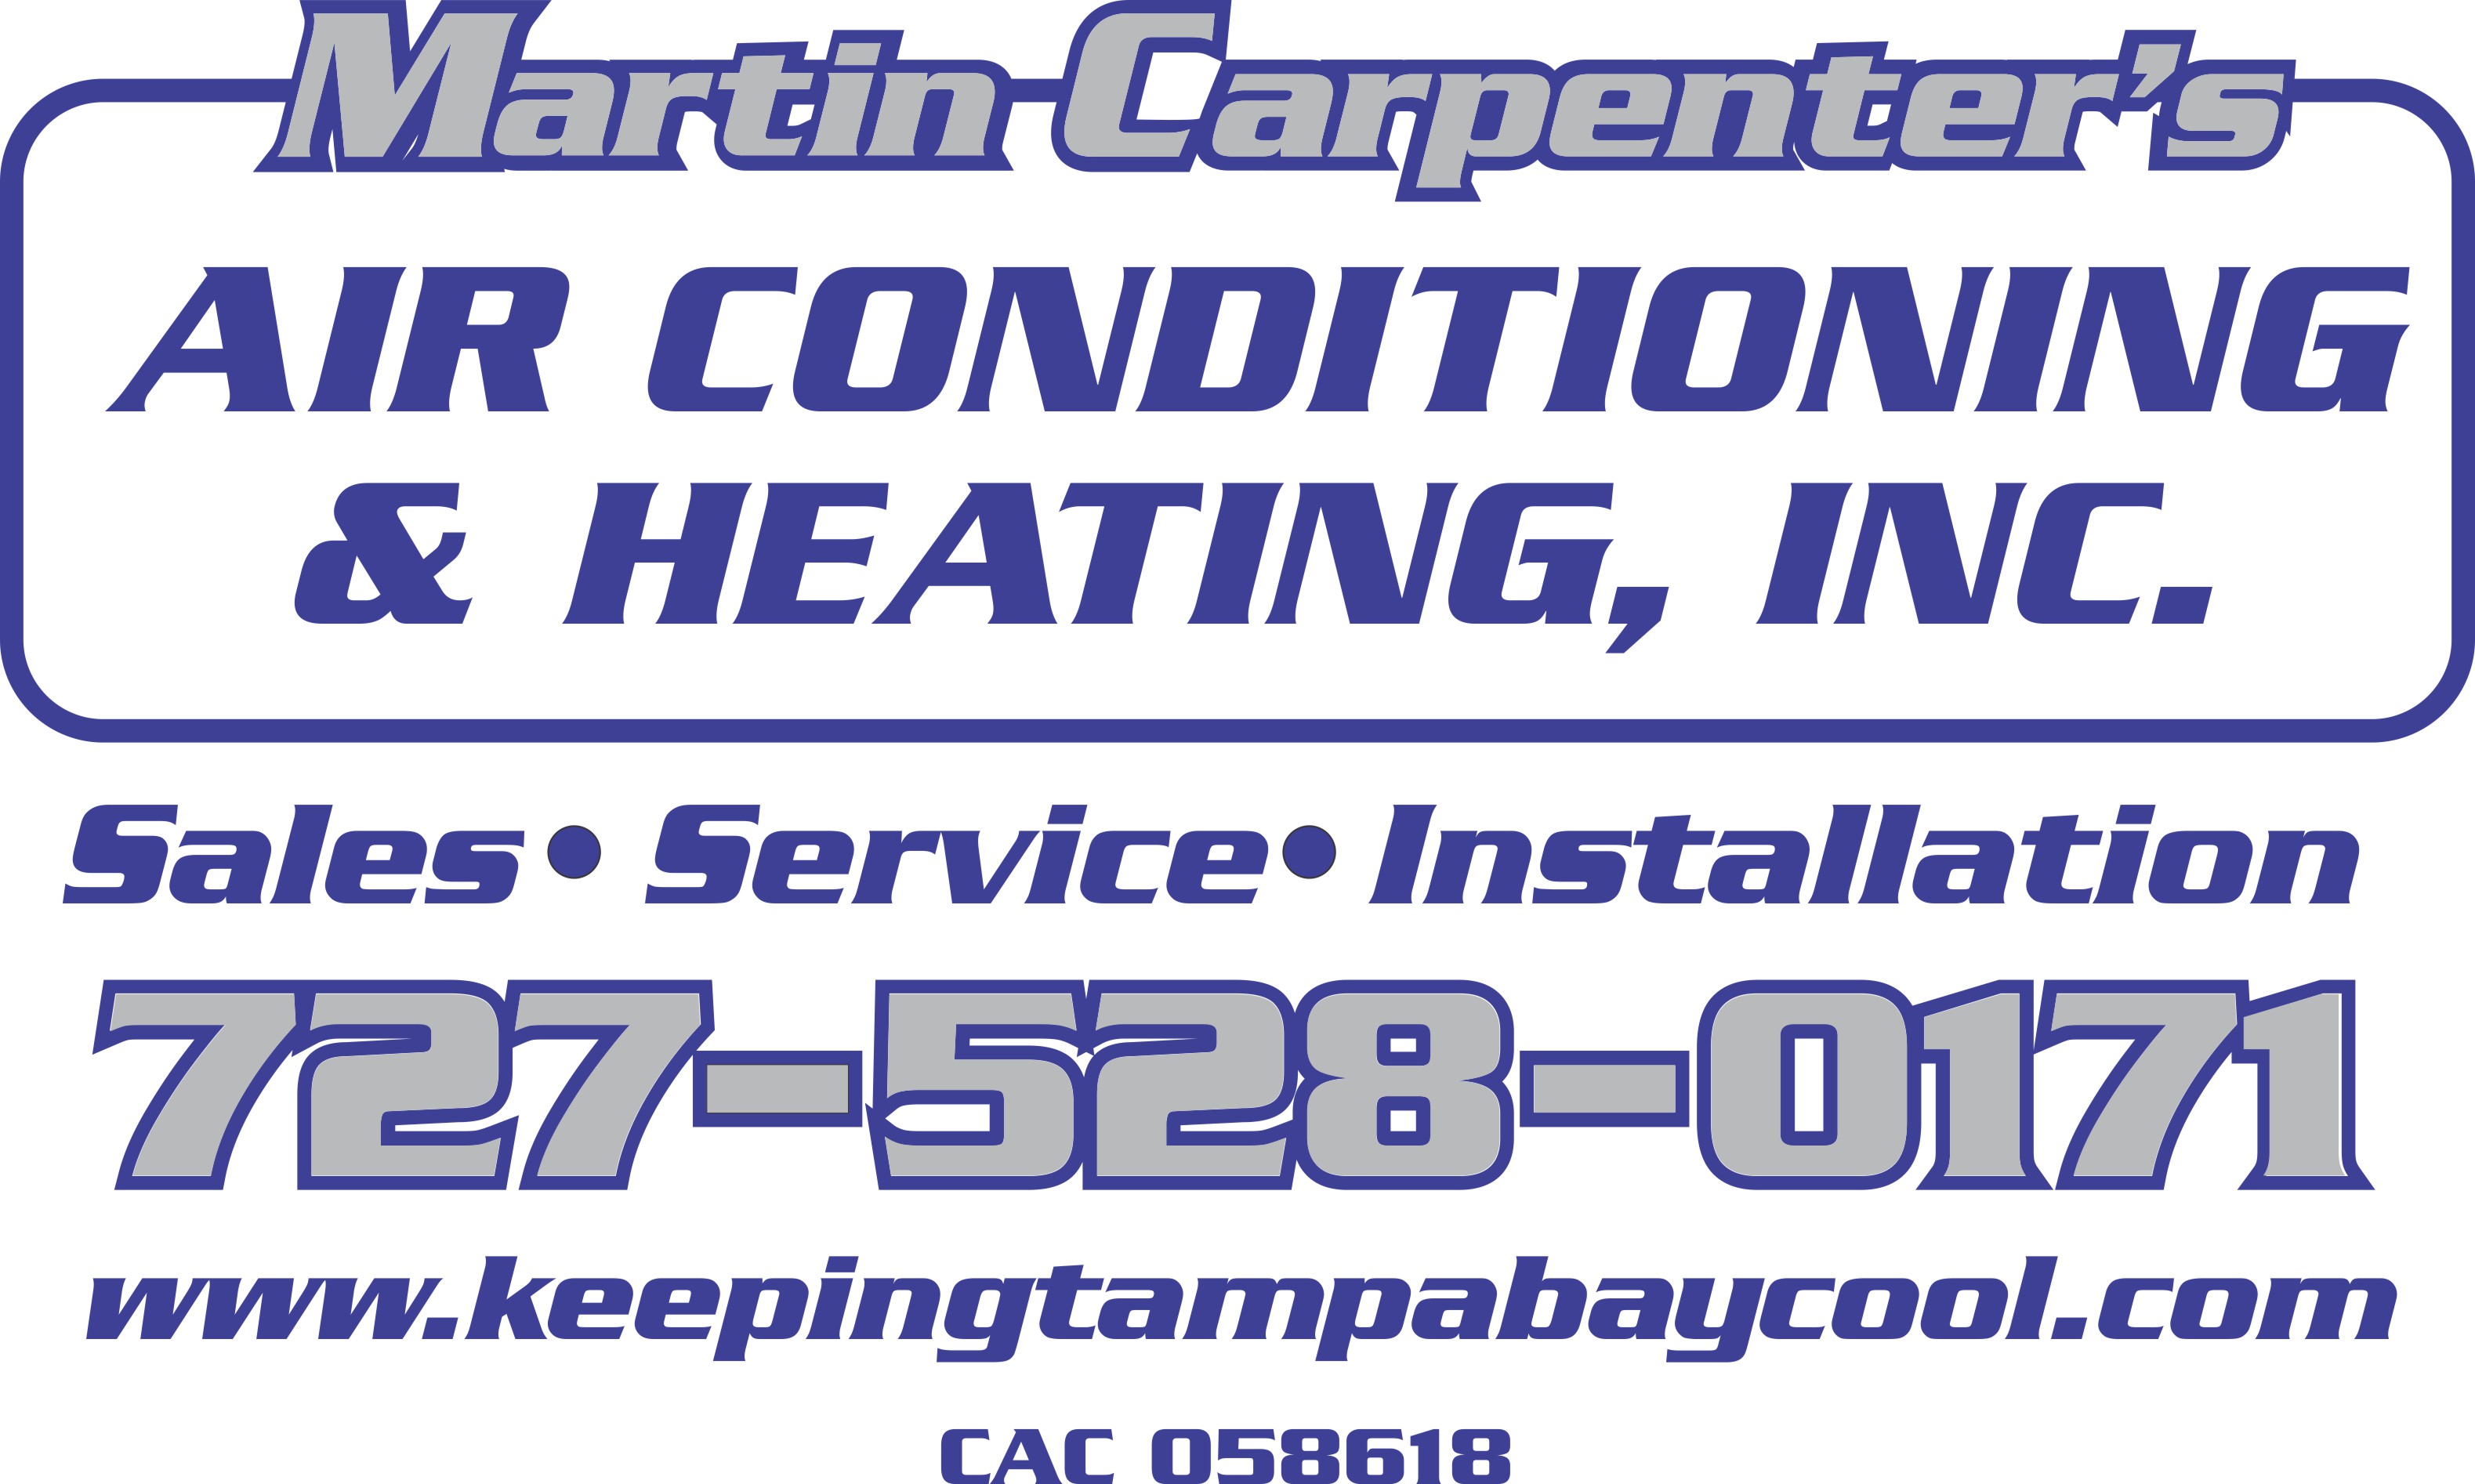 Martin Carpenter's Air Conditioning & Heating, Inc.